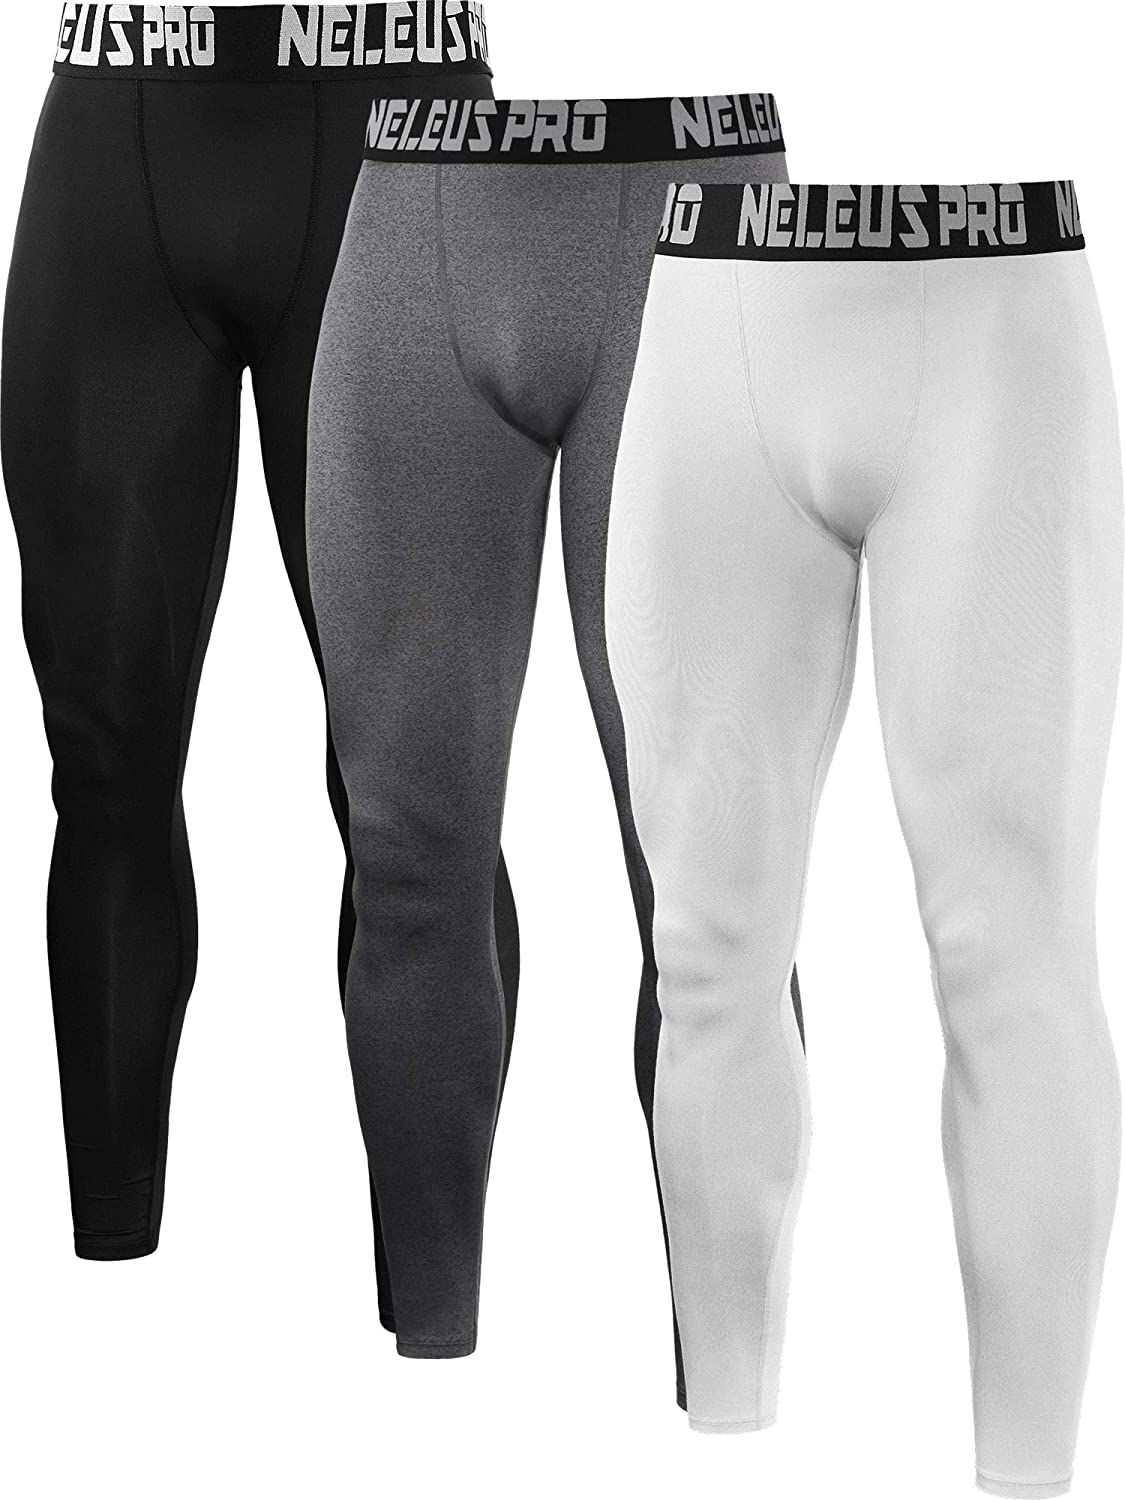 Neleus Men's Compression Pants Running Tights Jordan